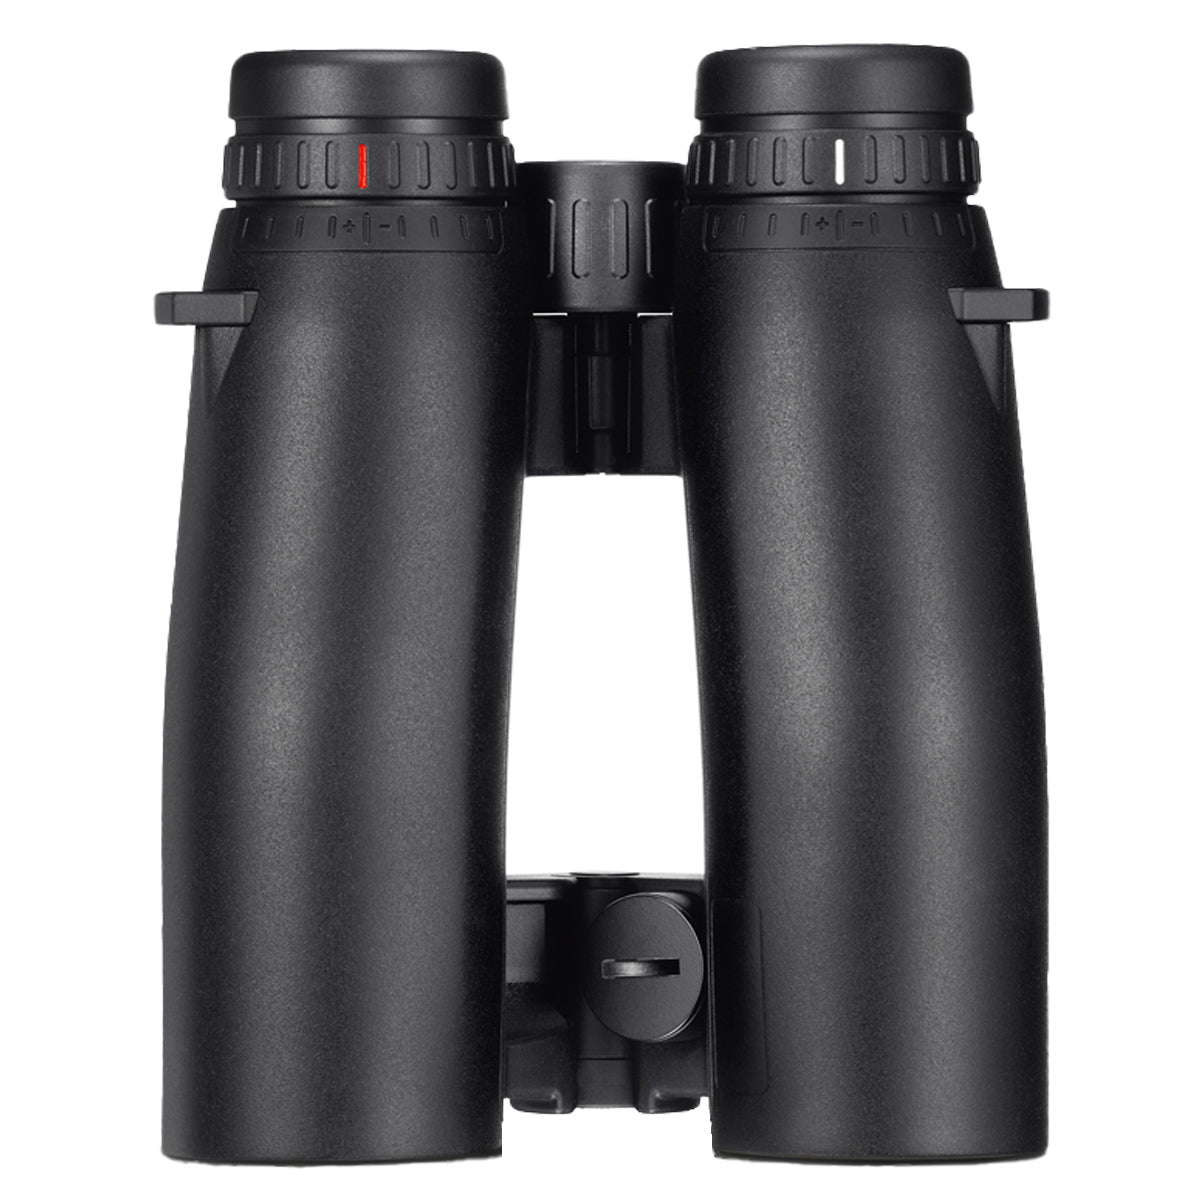 Leica Geovid Pro 8x42 Rangefinding Binocular in  by GOHUNT | Leica - GOHUNT Shop